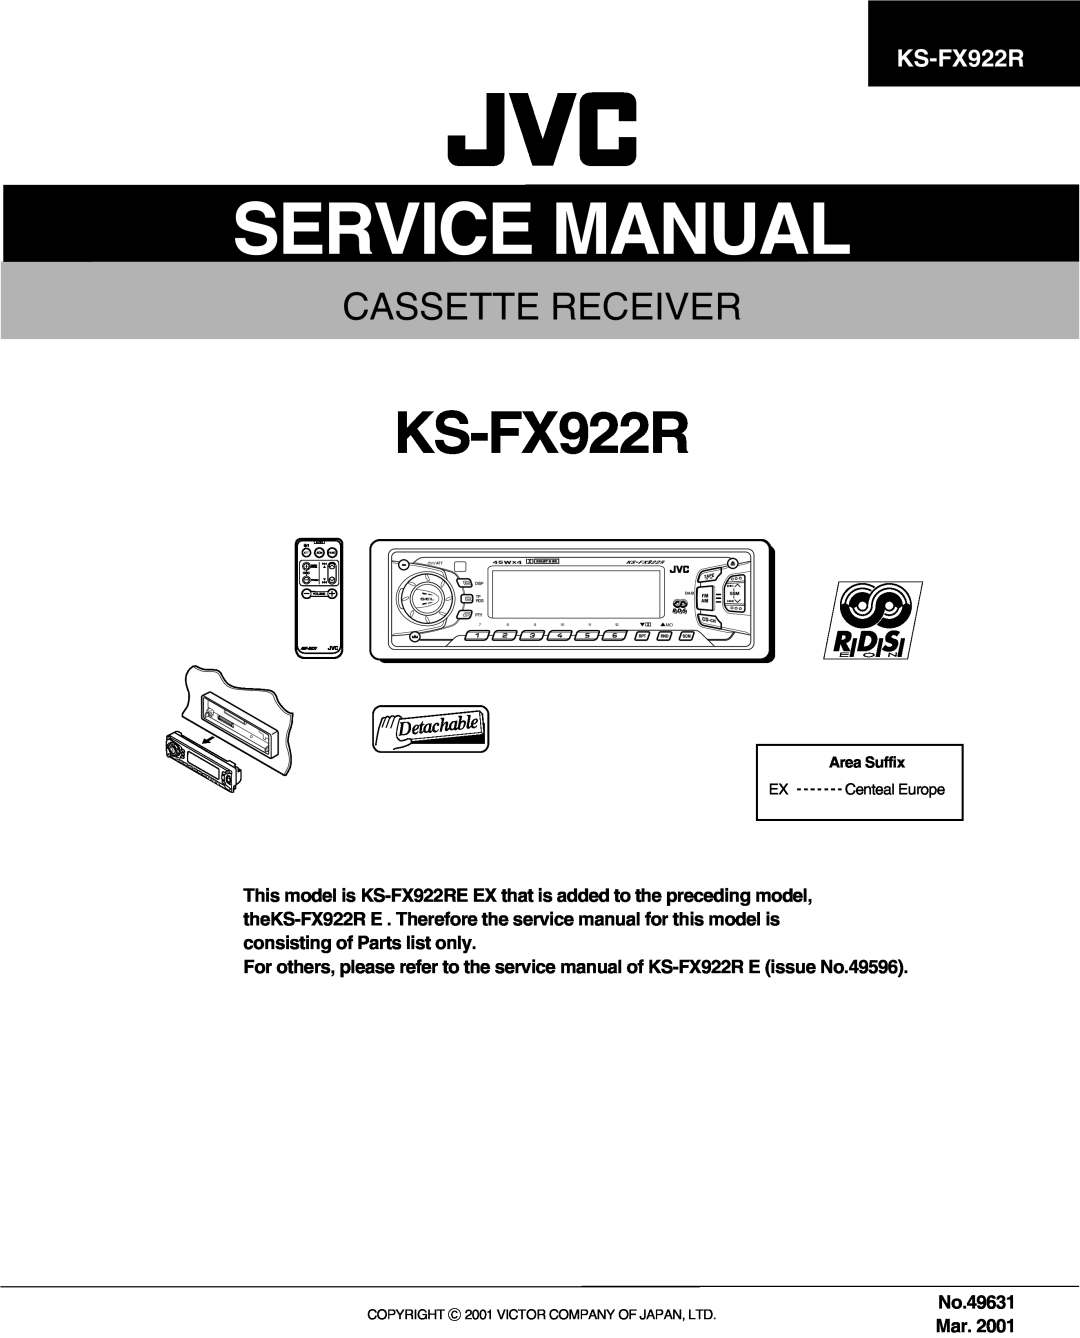 JVC KS-FX922R service manual Cassette Receiver, No.49631 Mar 